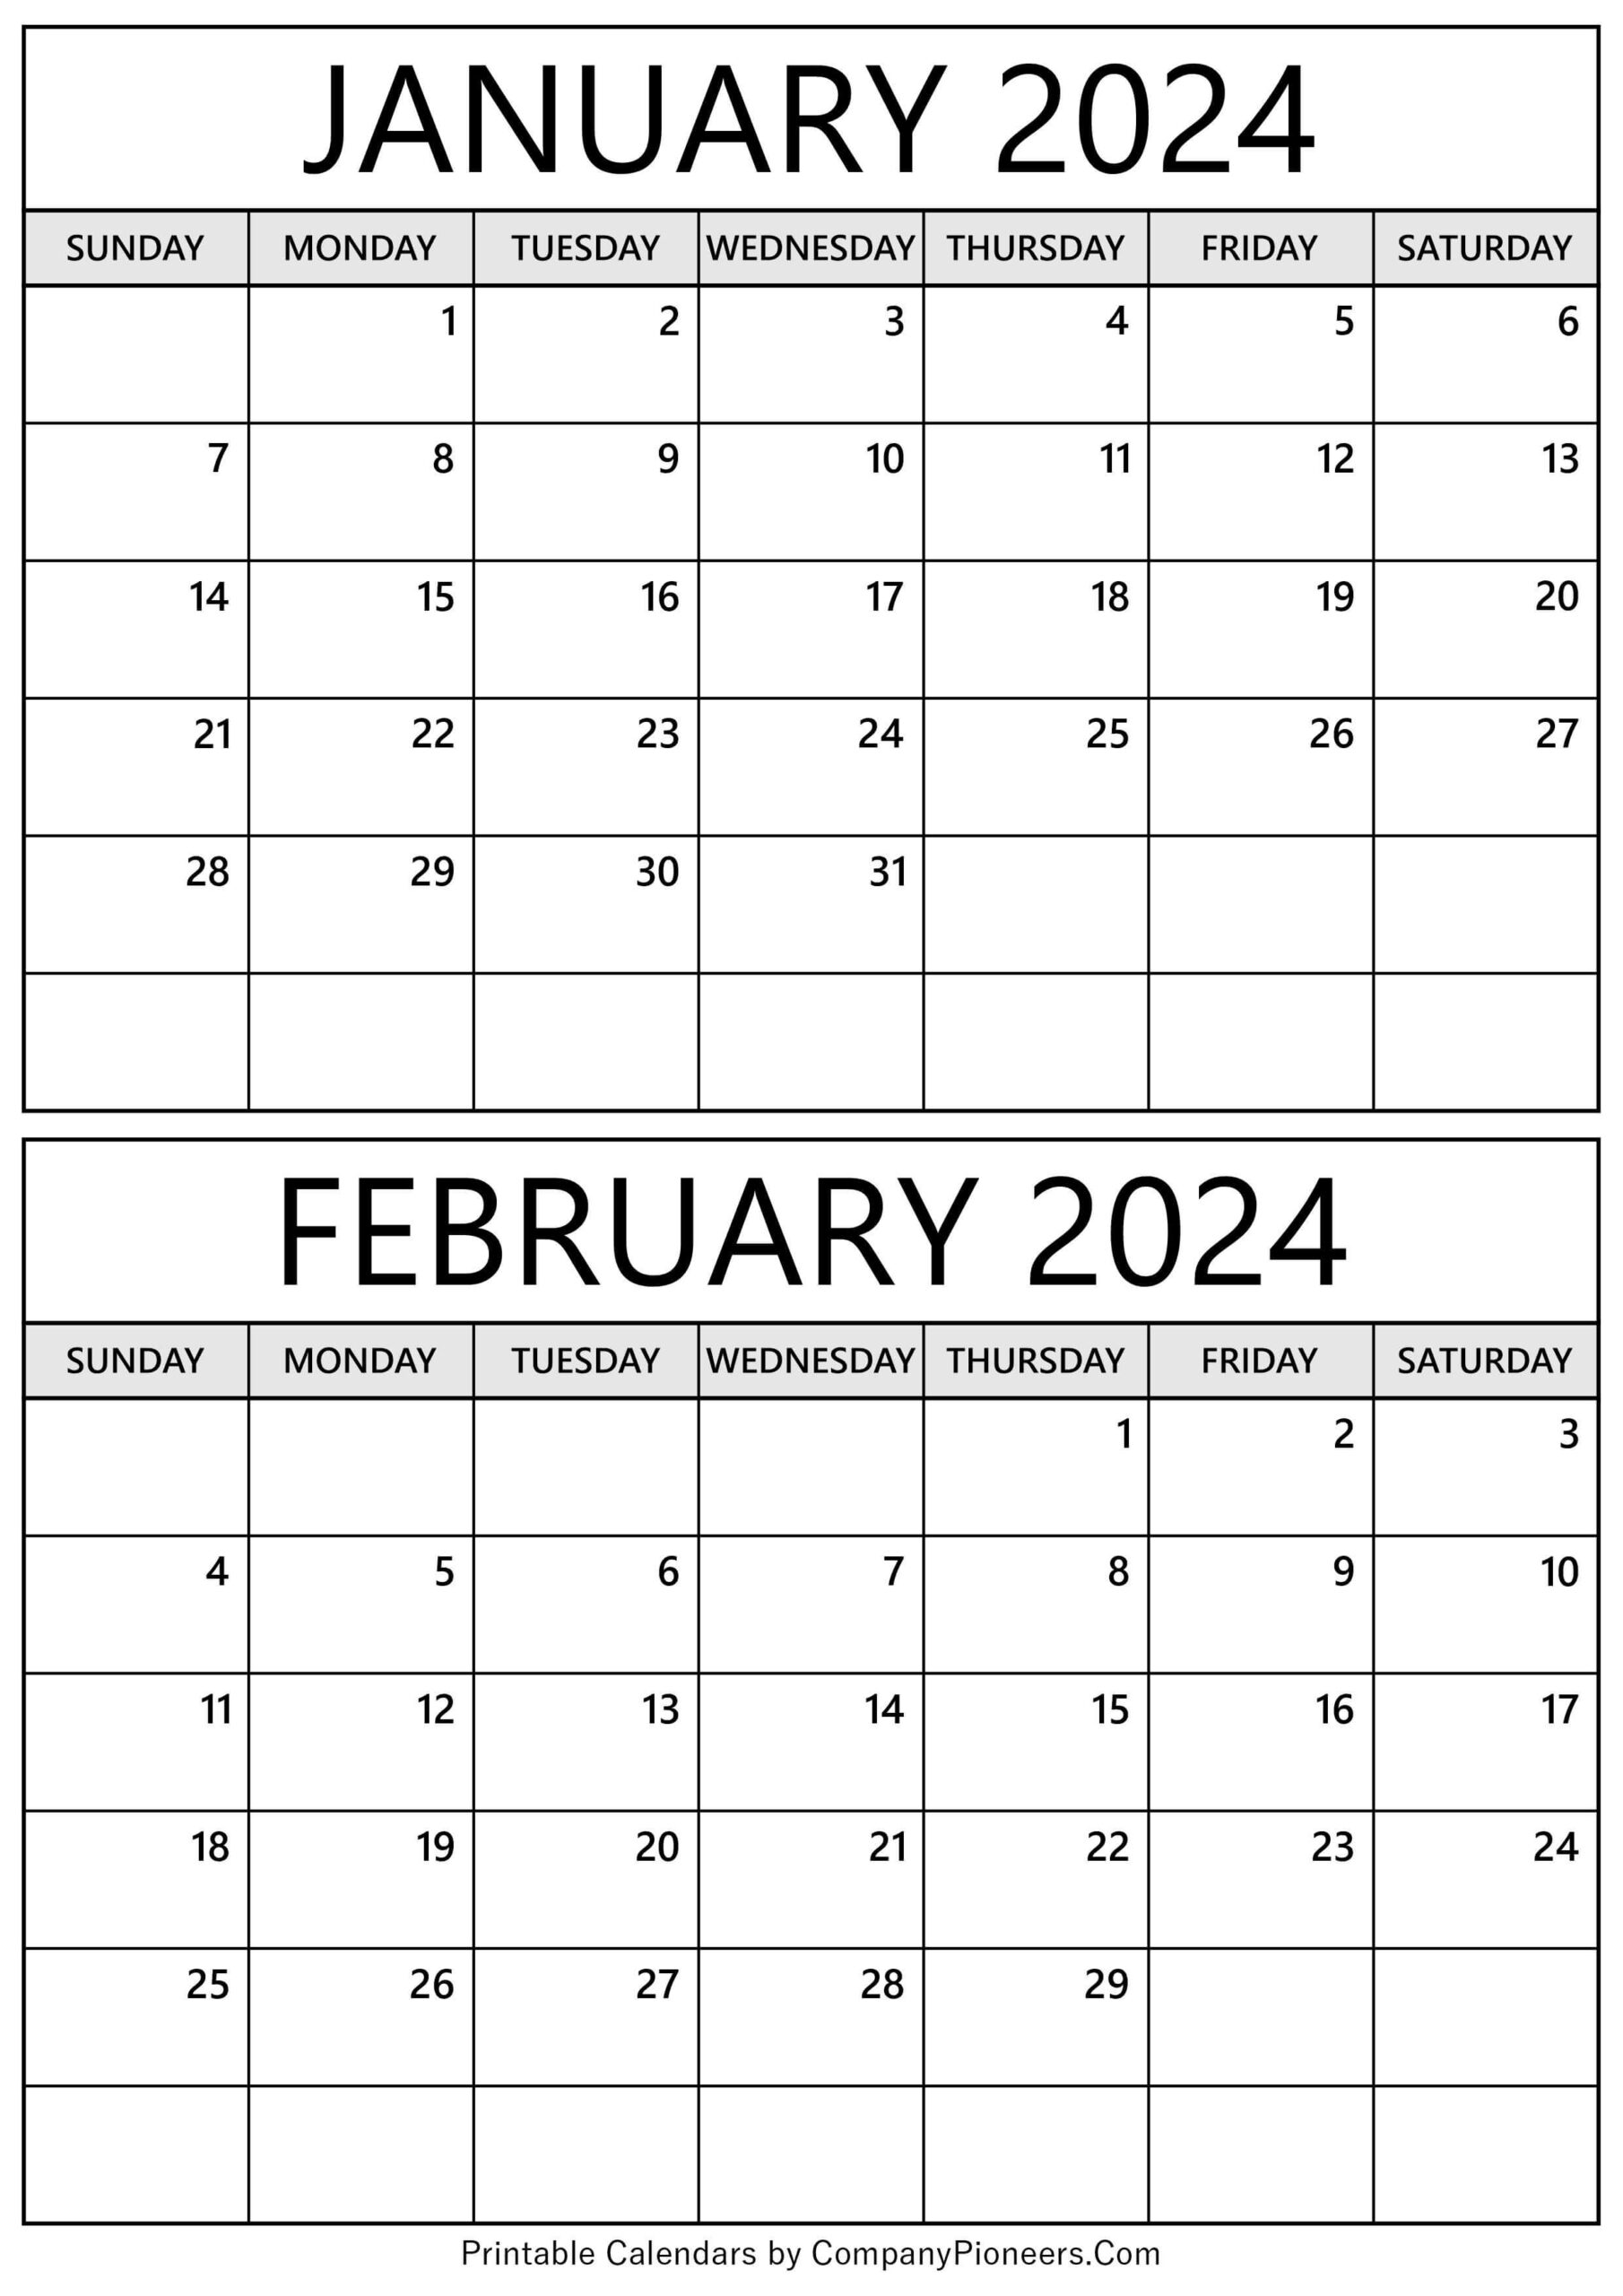 January February 2024 Calendar Printable - Template for January February Calendar 2024 Printable